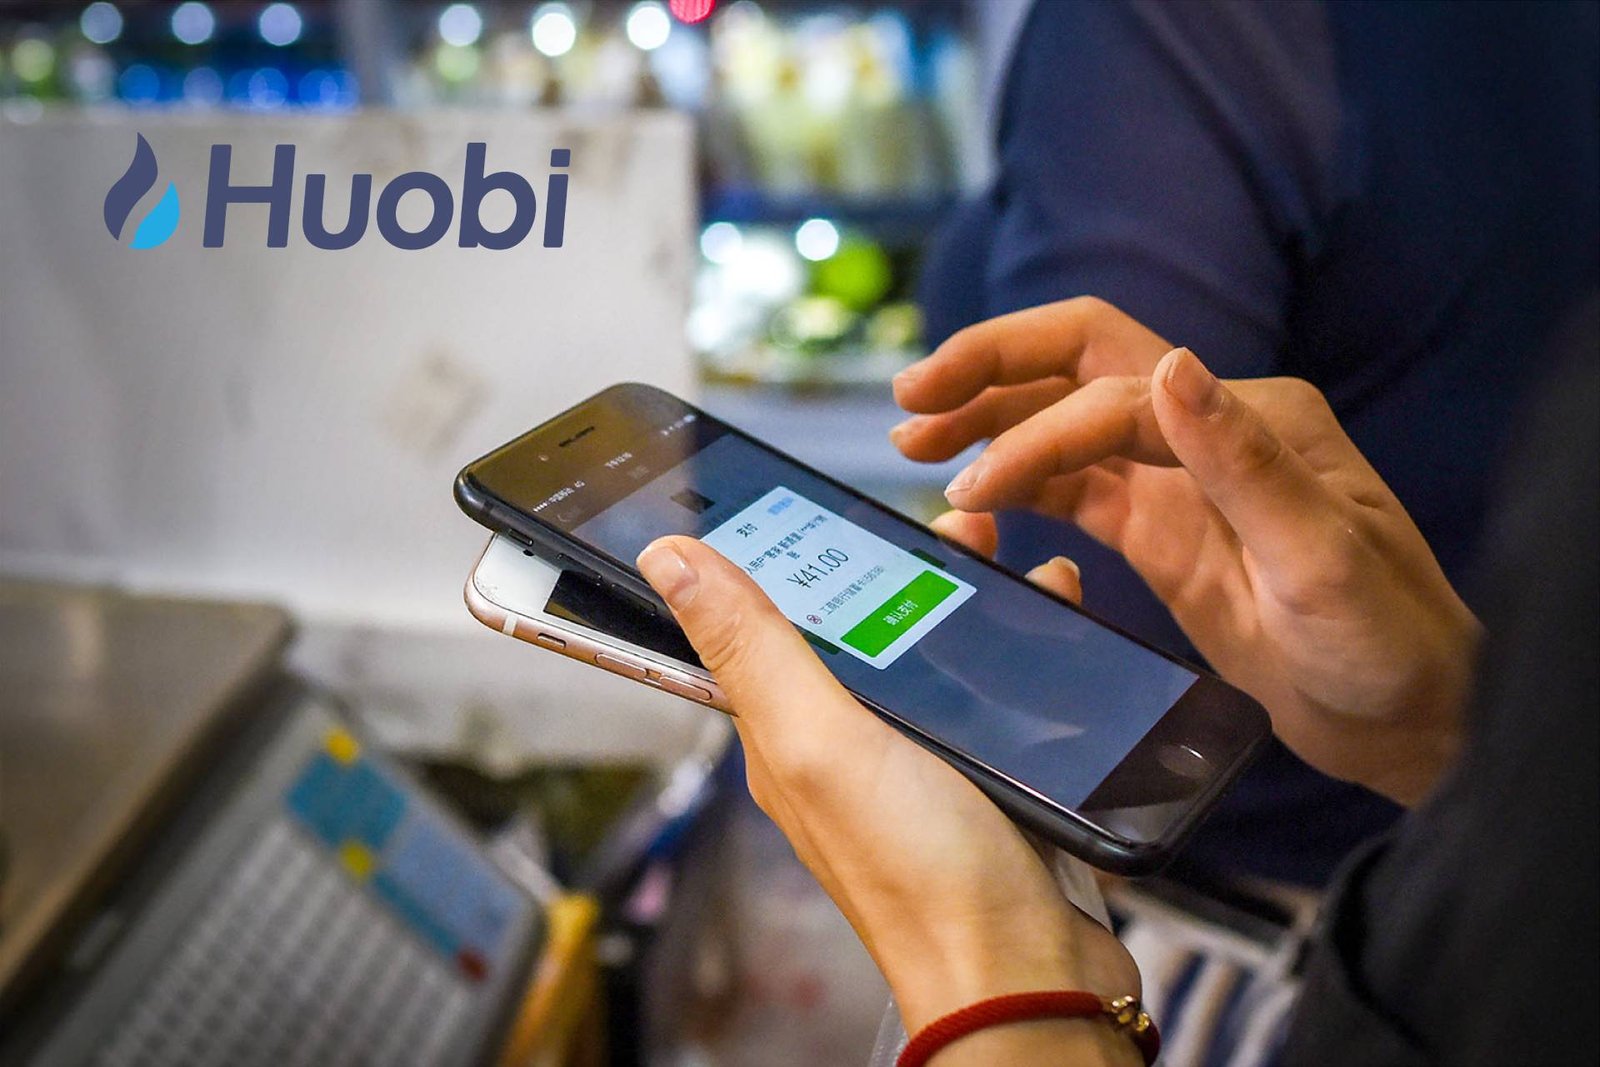 Huobi Wallet Launches Japanese & Korean Versions